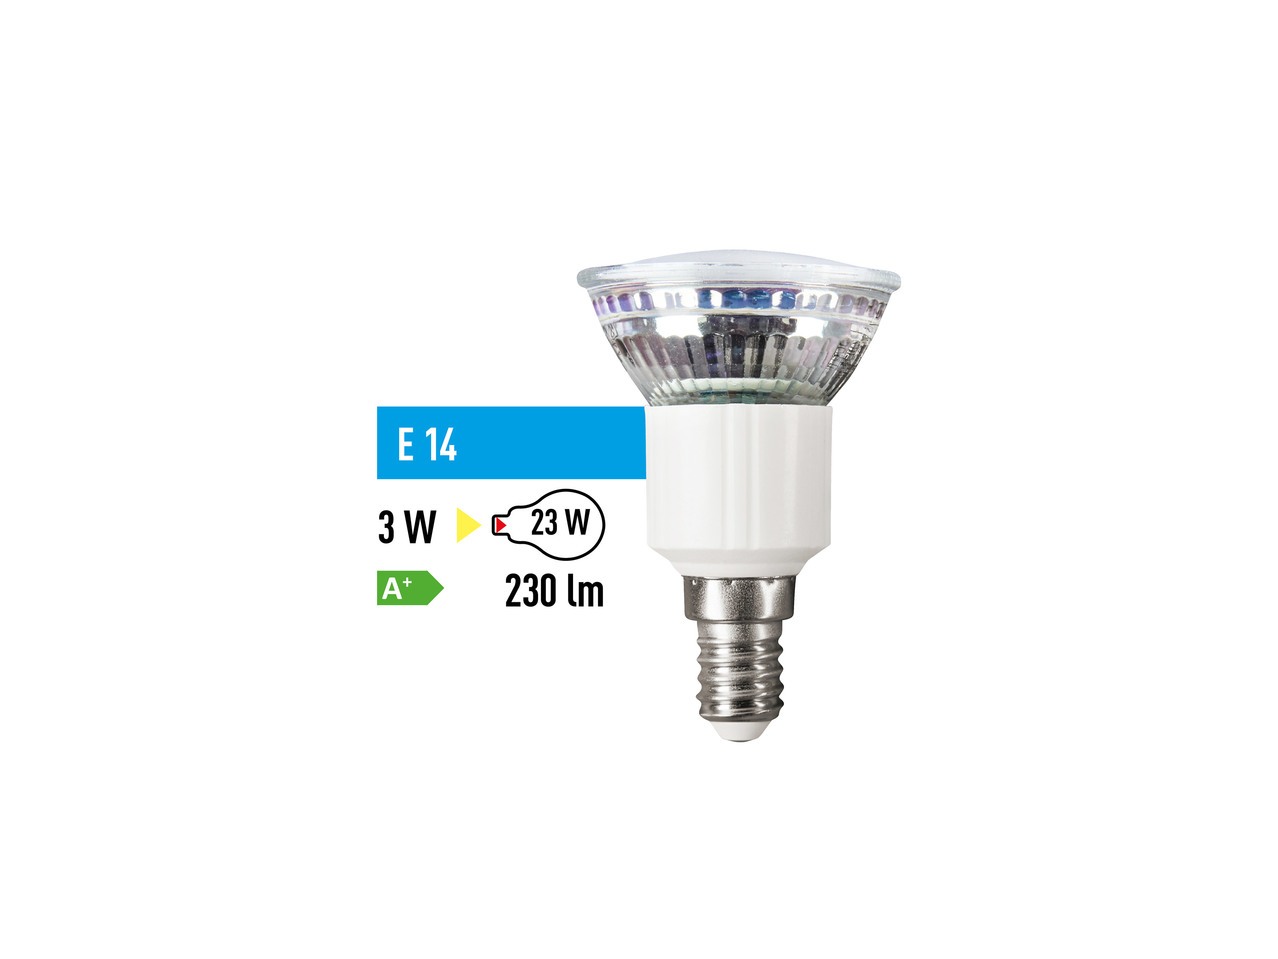 LED reflektorová žárovka 3 W